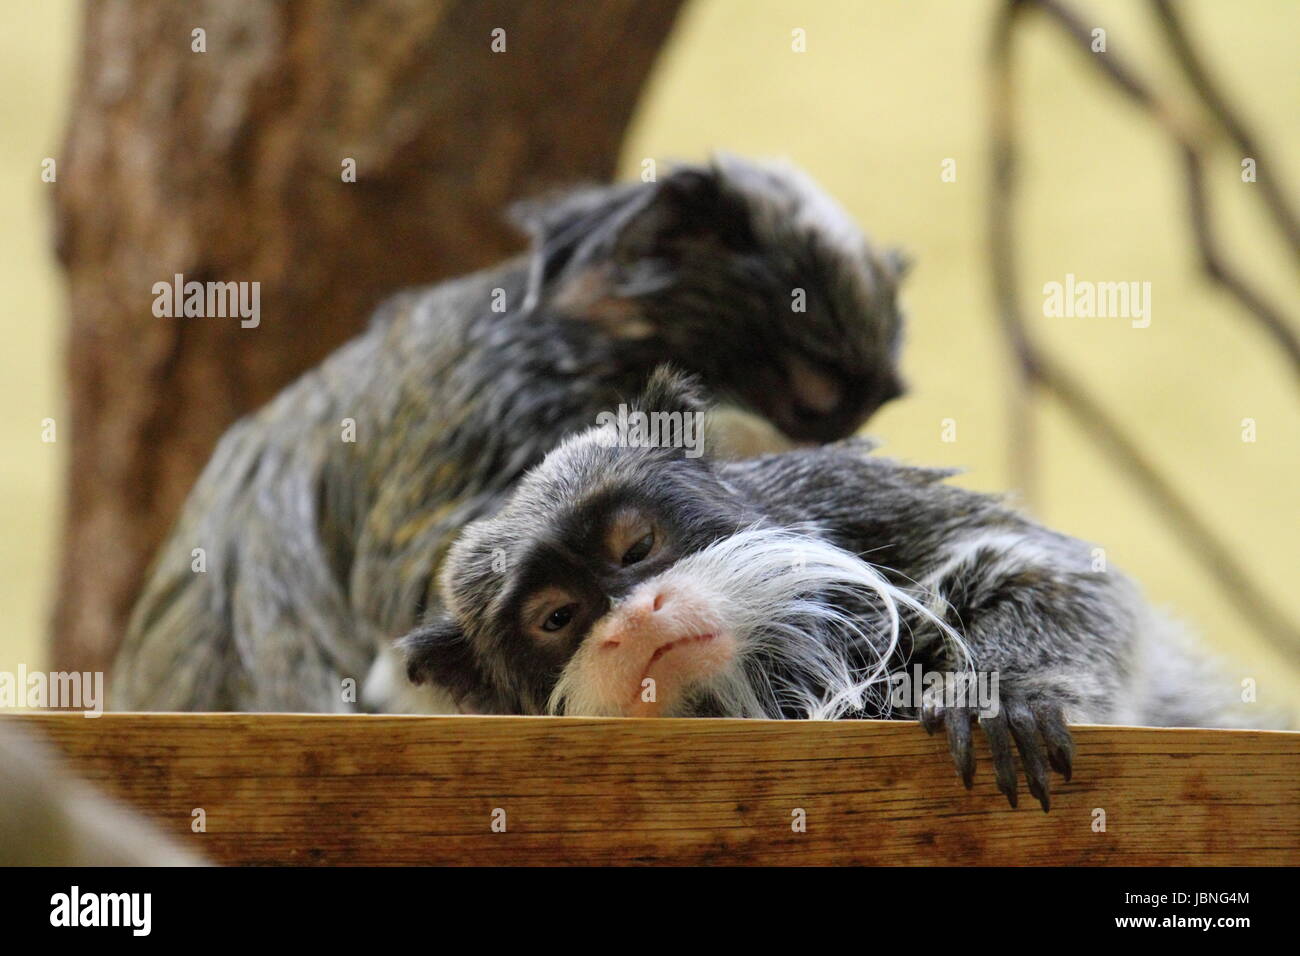 kaiserschnurrbart tamarine in the fur care Stock Photo